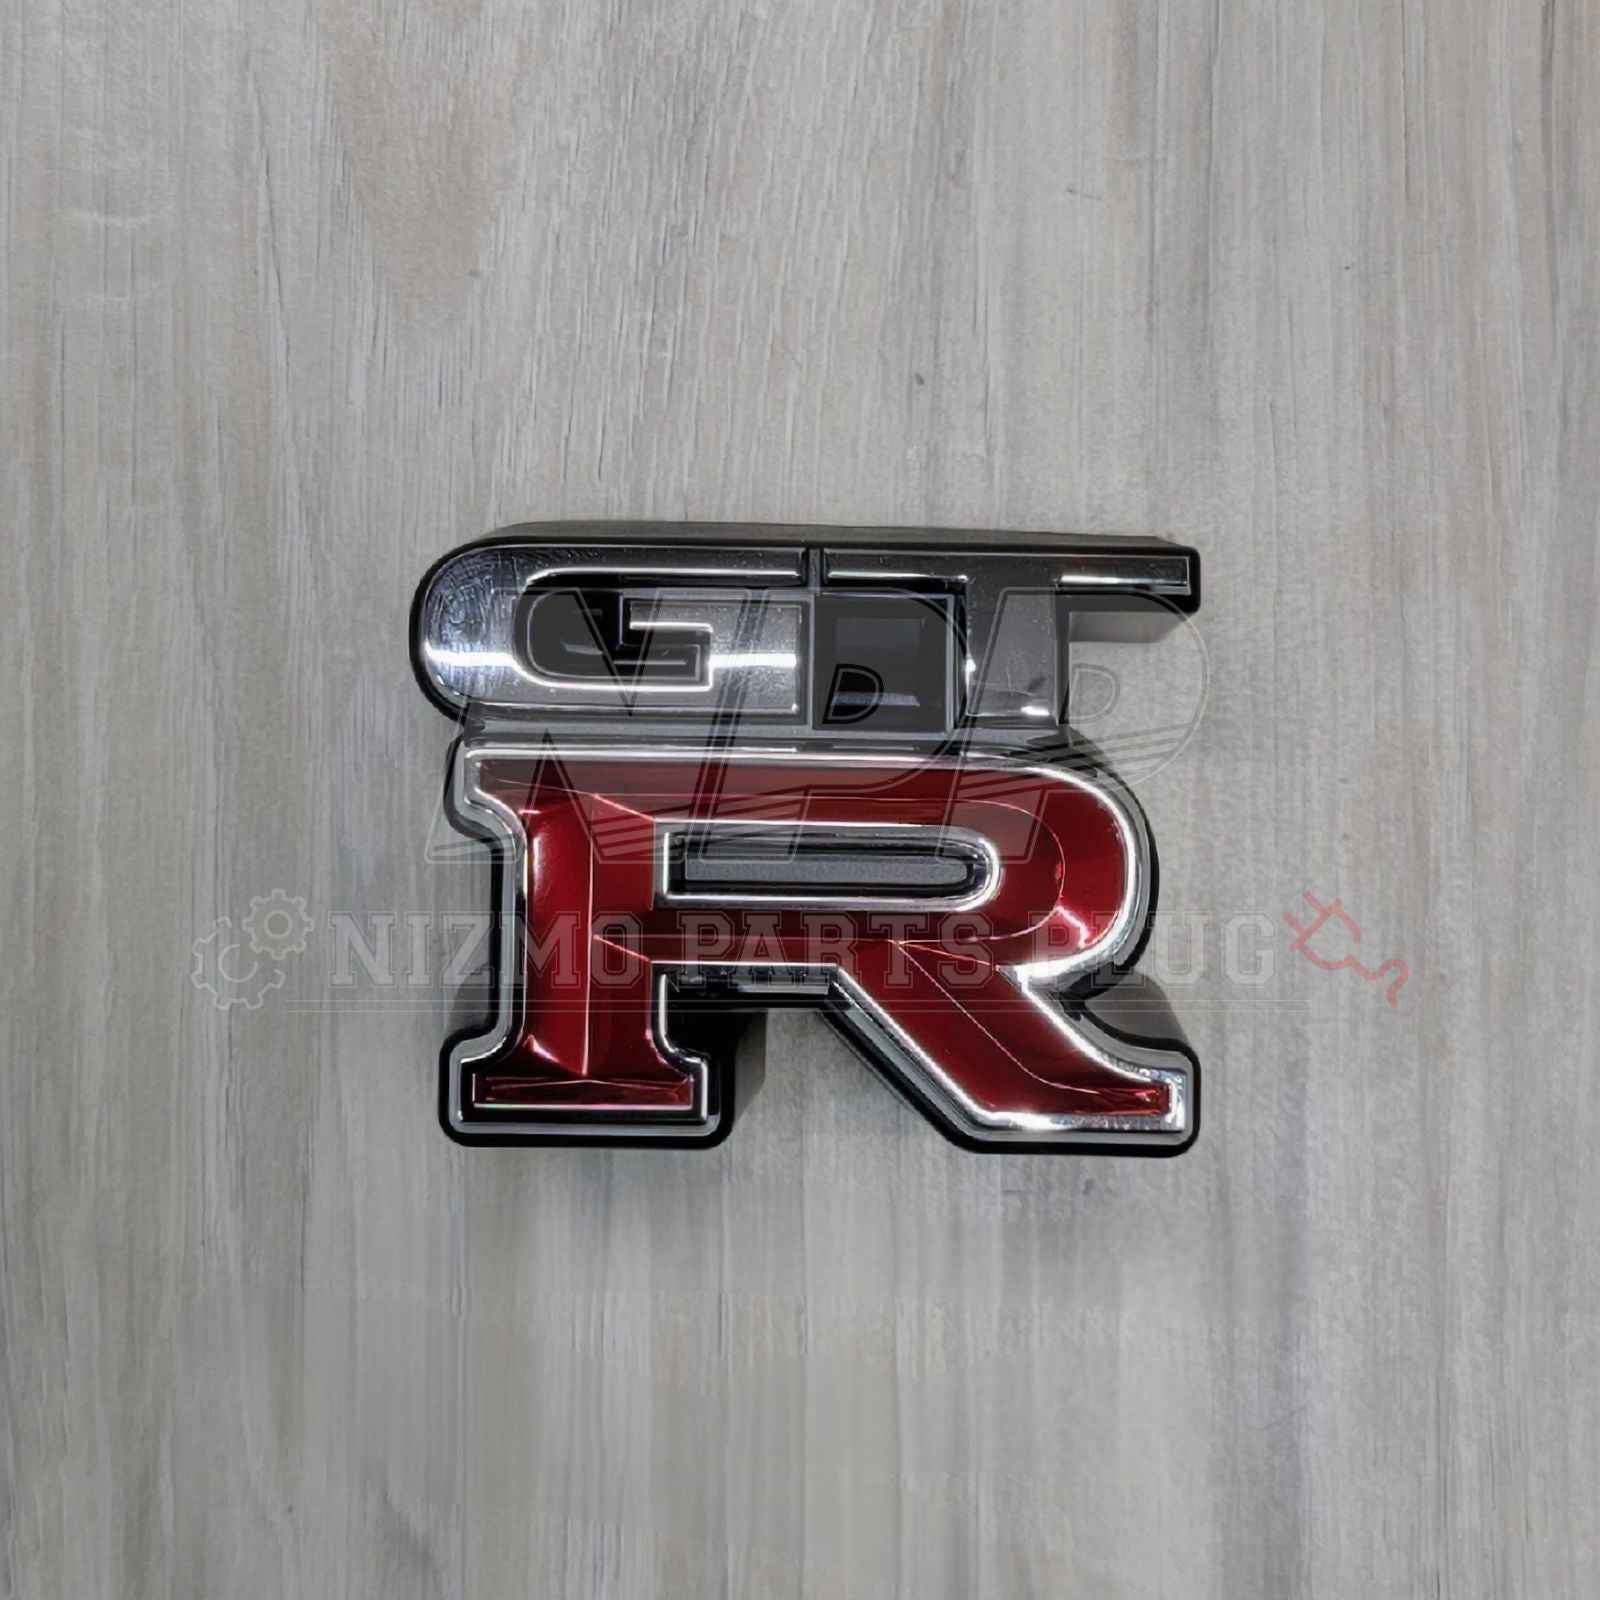 R34 Nissan Skyline GTR Front Grill Emblem